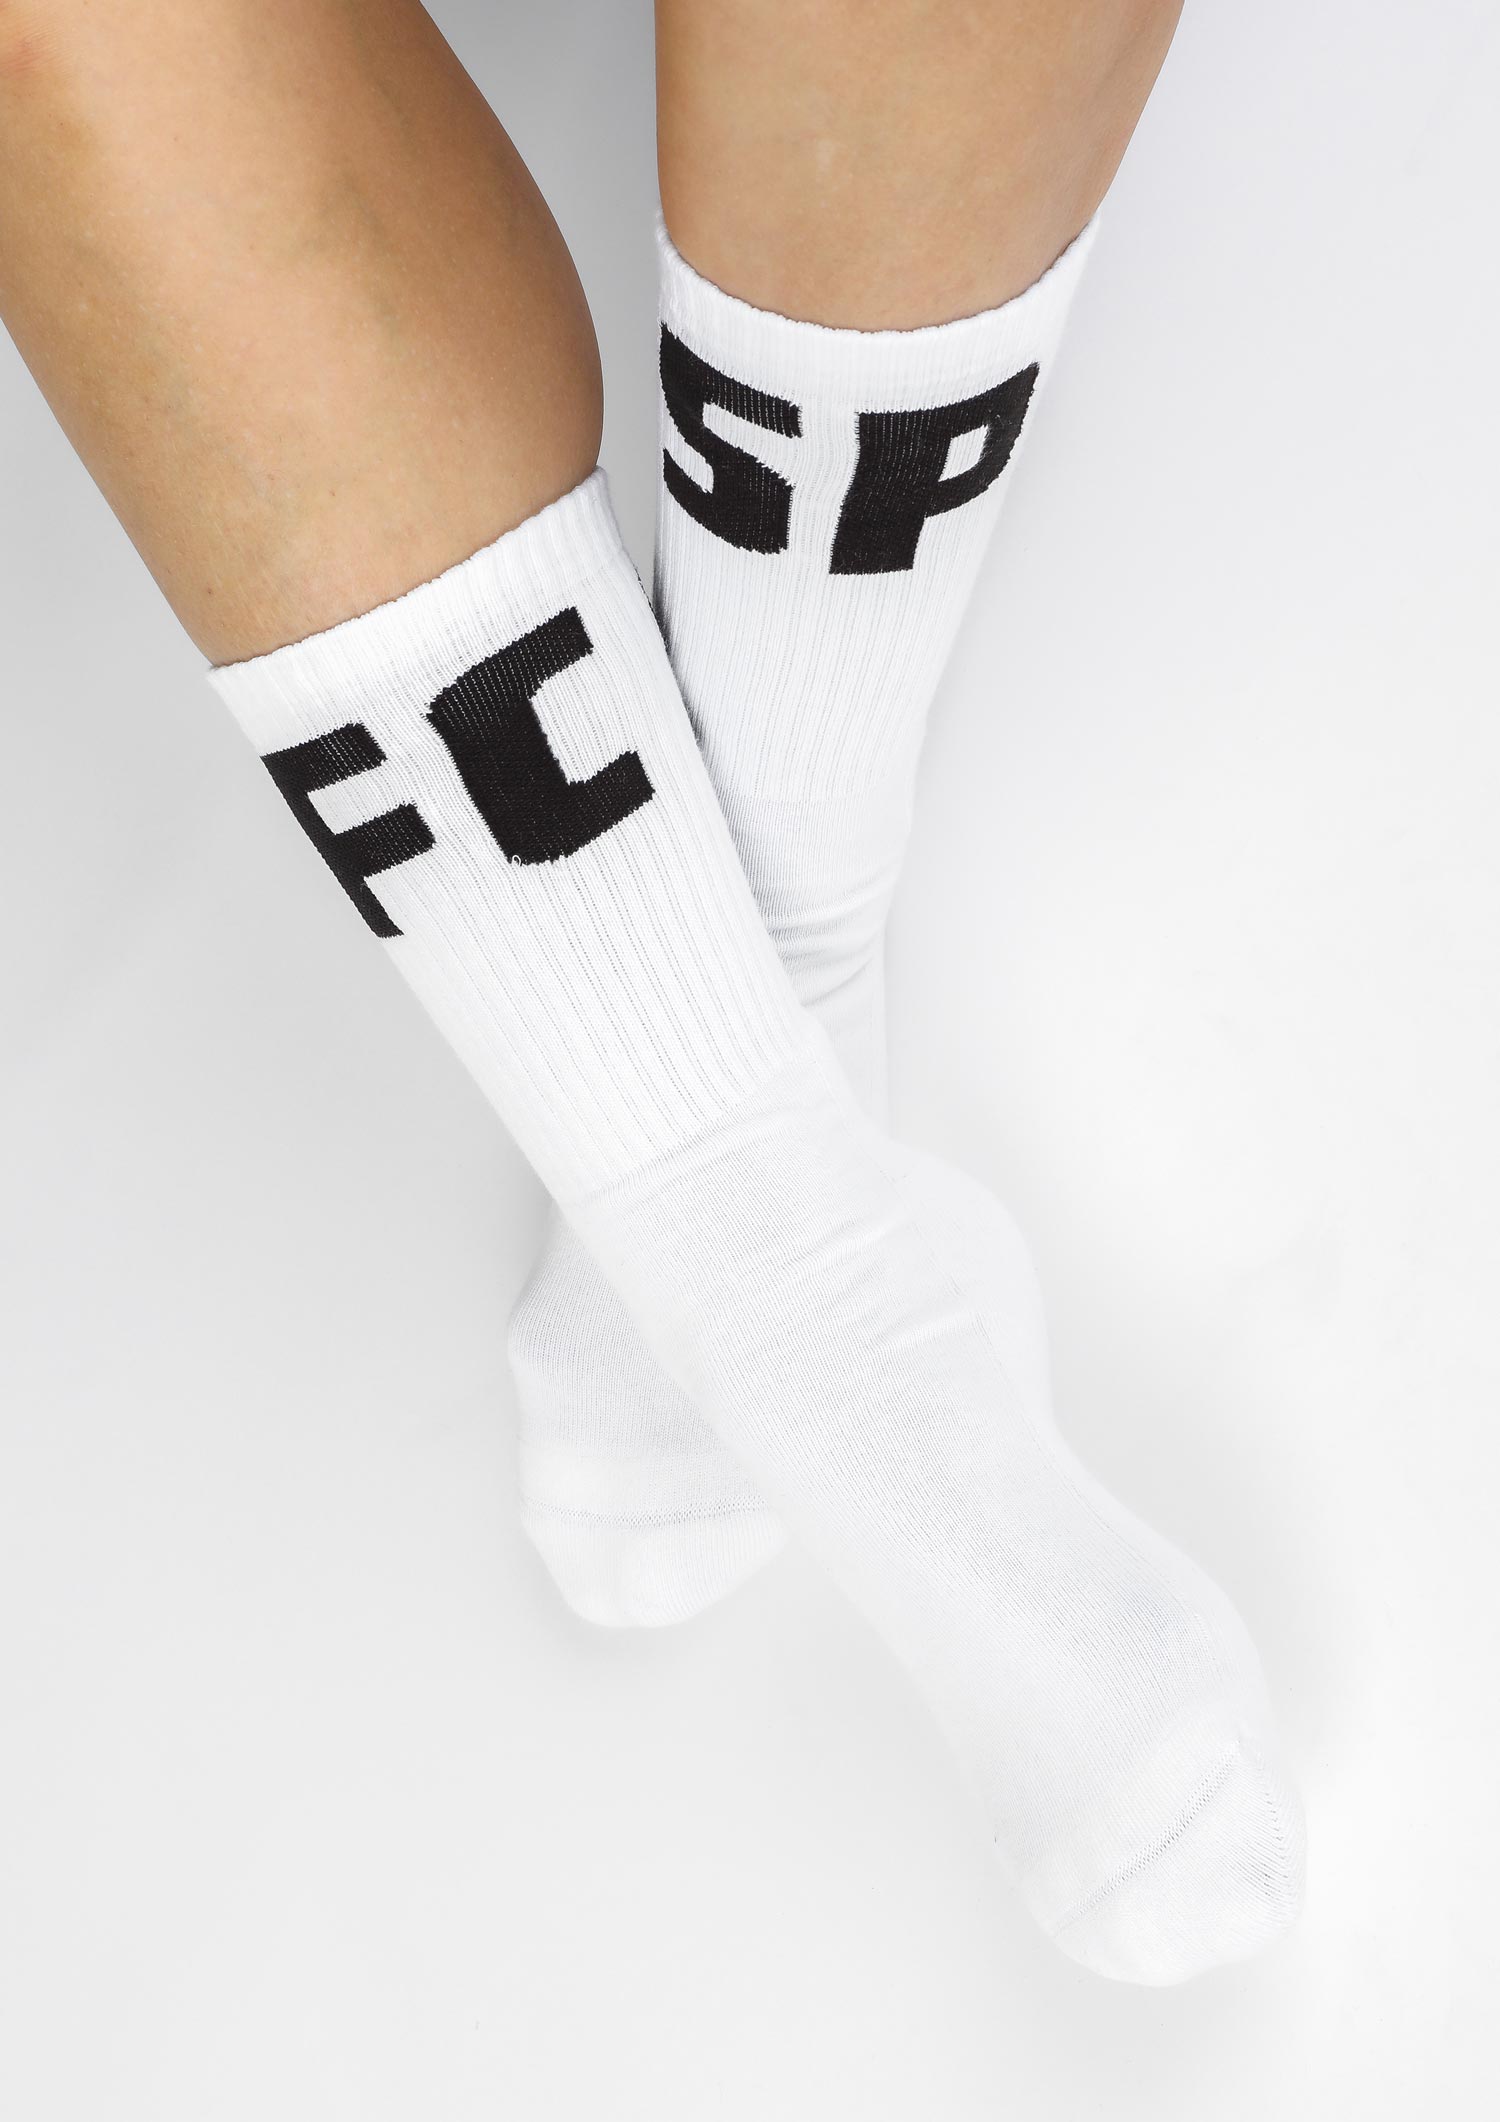 Tennis socks "FCSP" white-brown